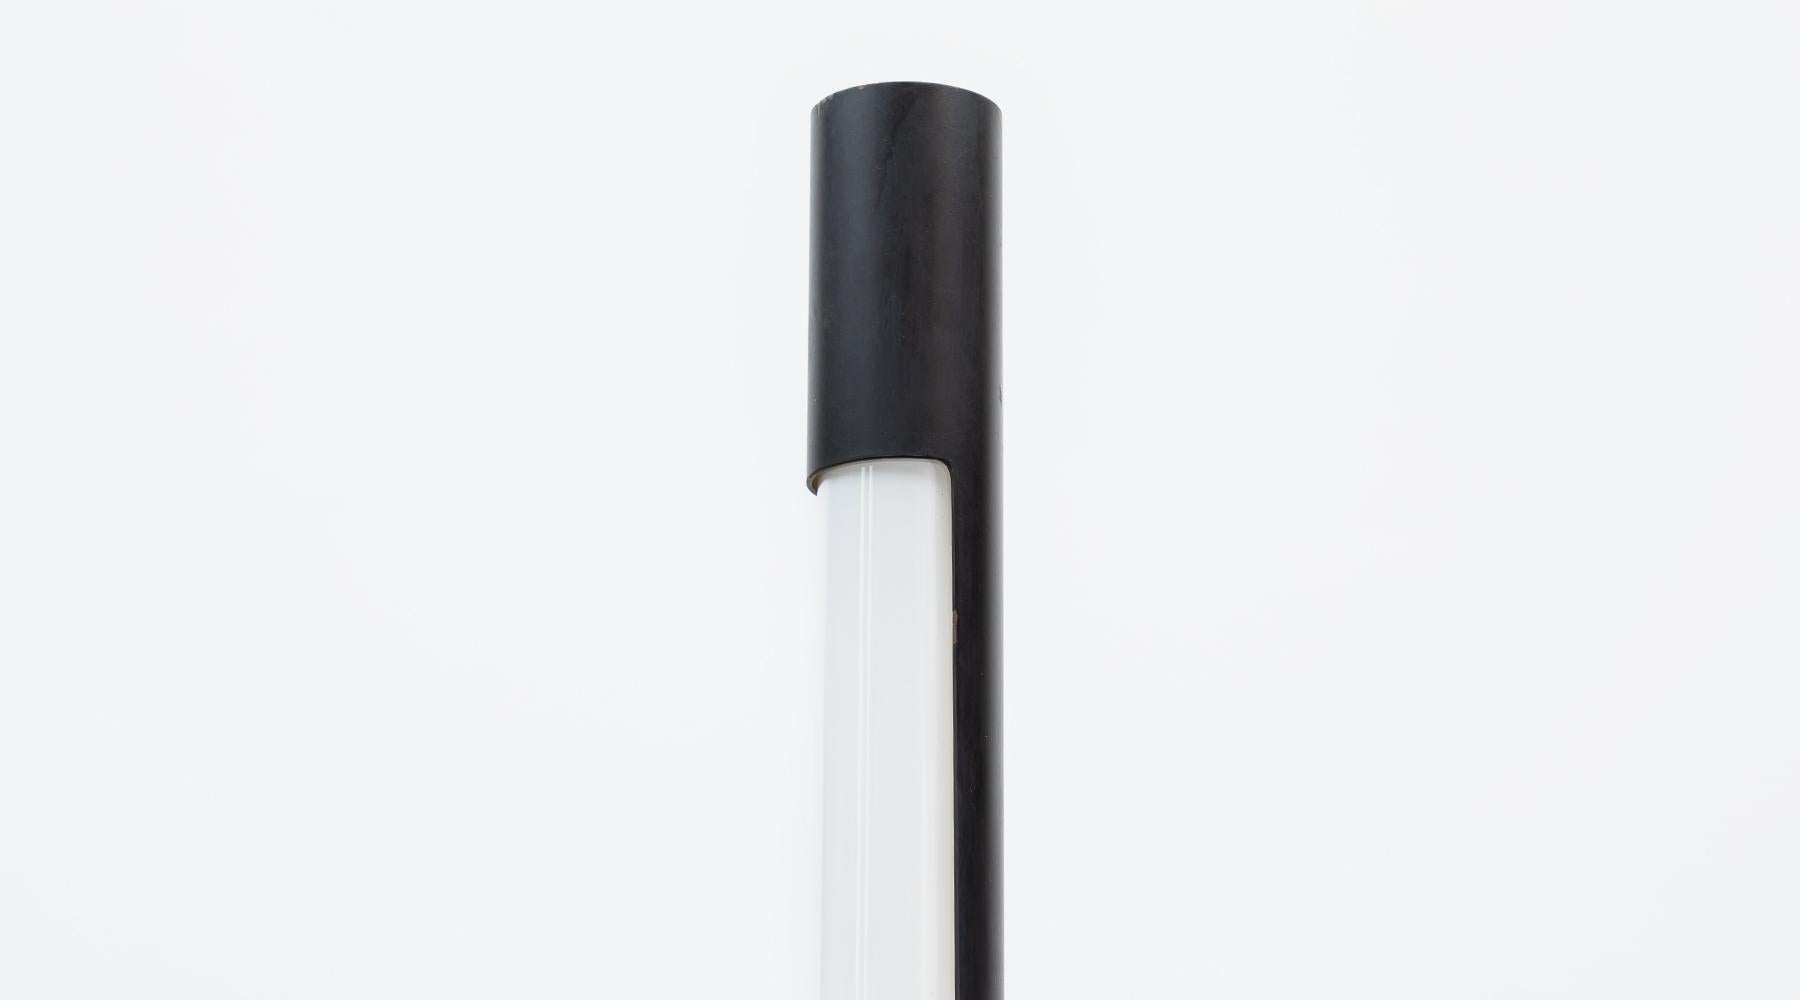 Gino Sarfatti N°1063 Floor Lamp in black For Sale 3